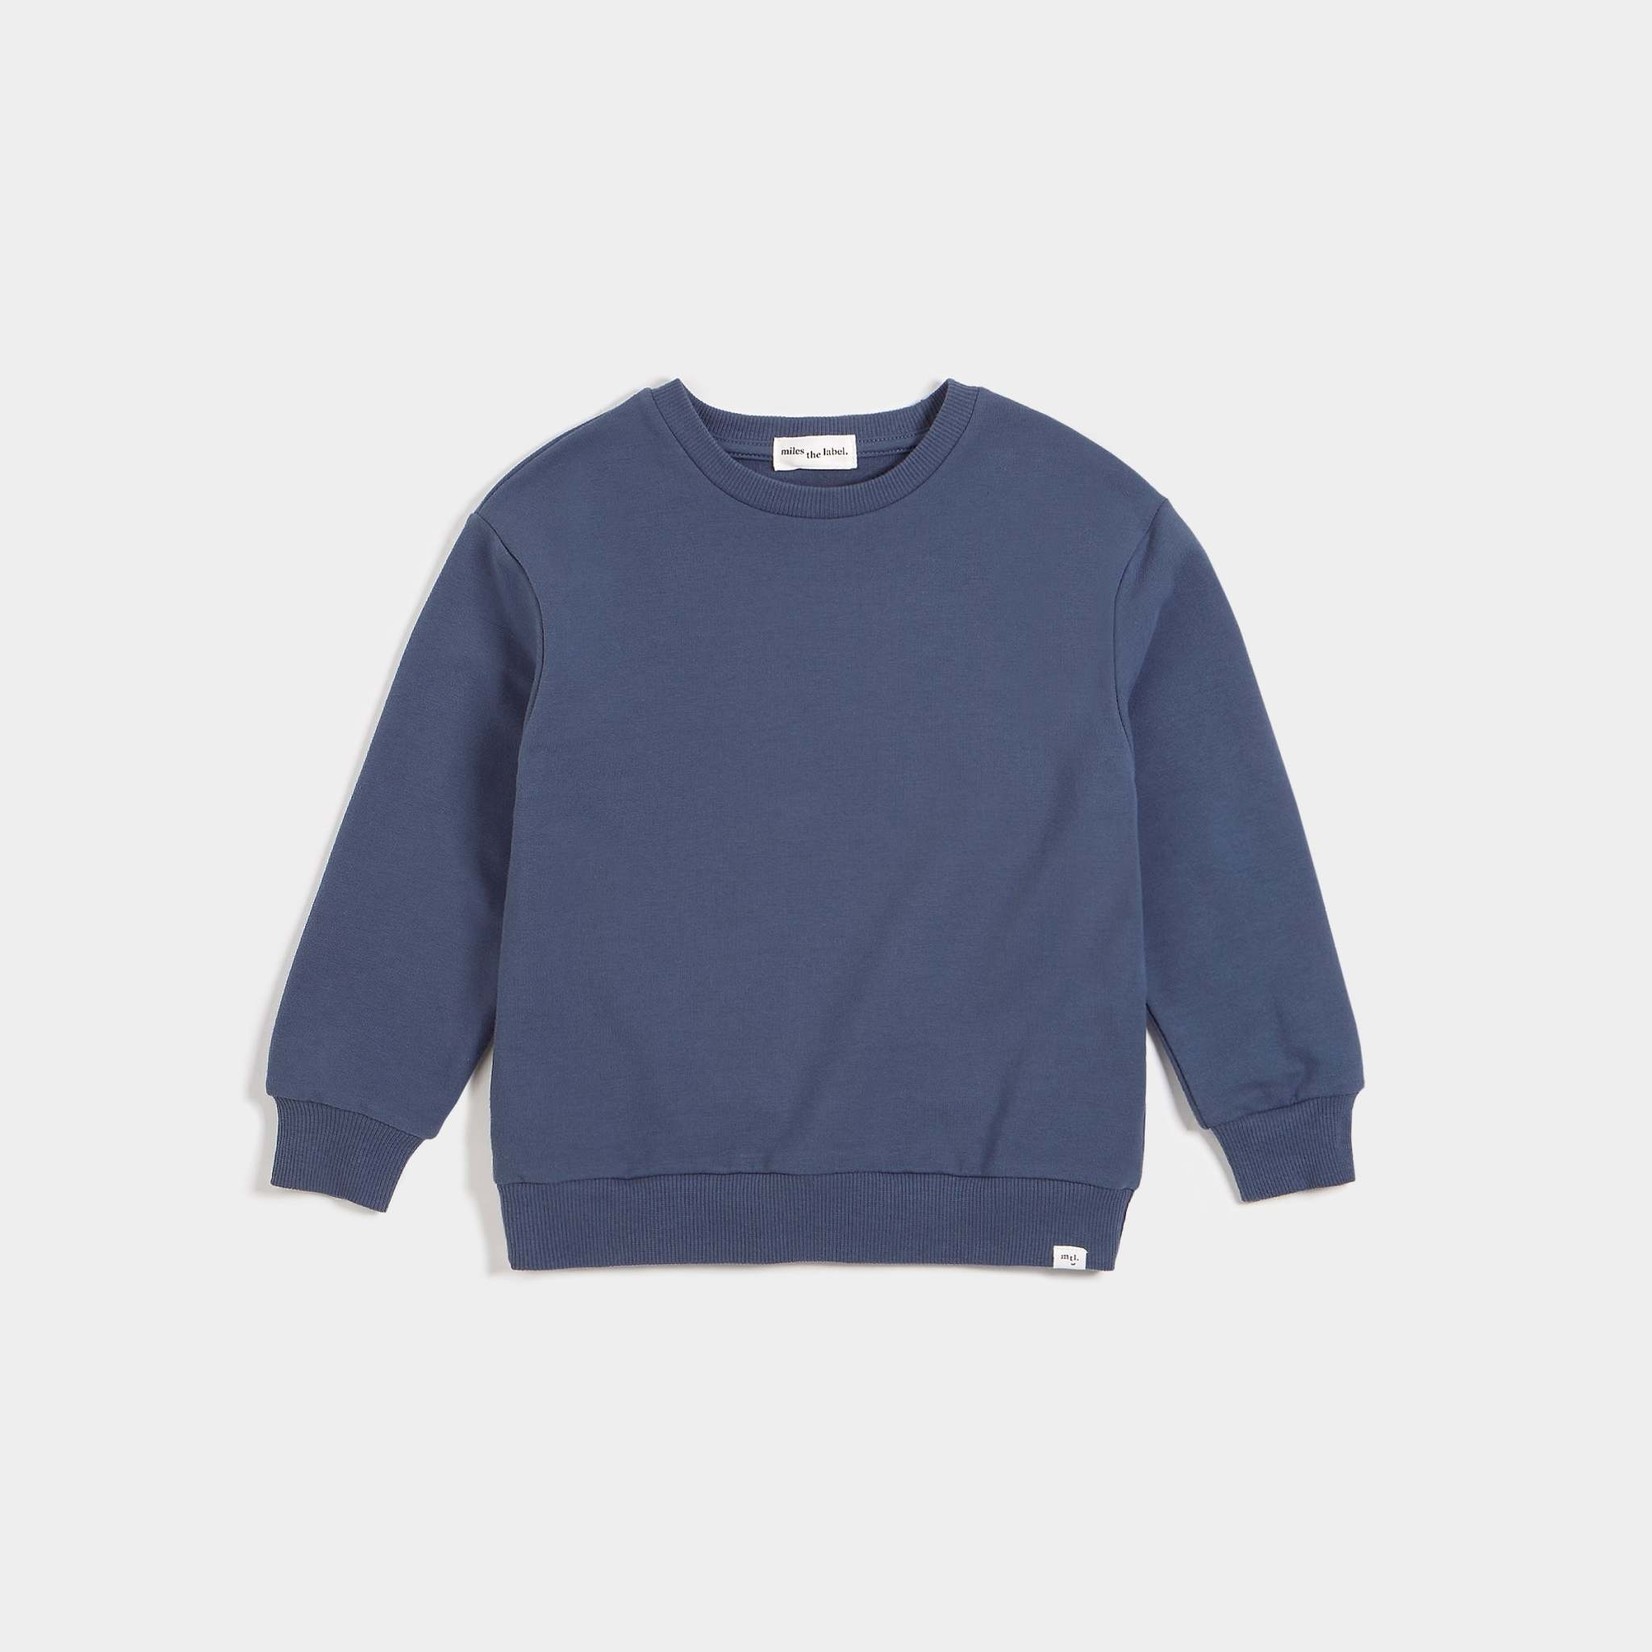 Miles the label MILES THE LABEL - Vintage blue sweatshirt